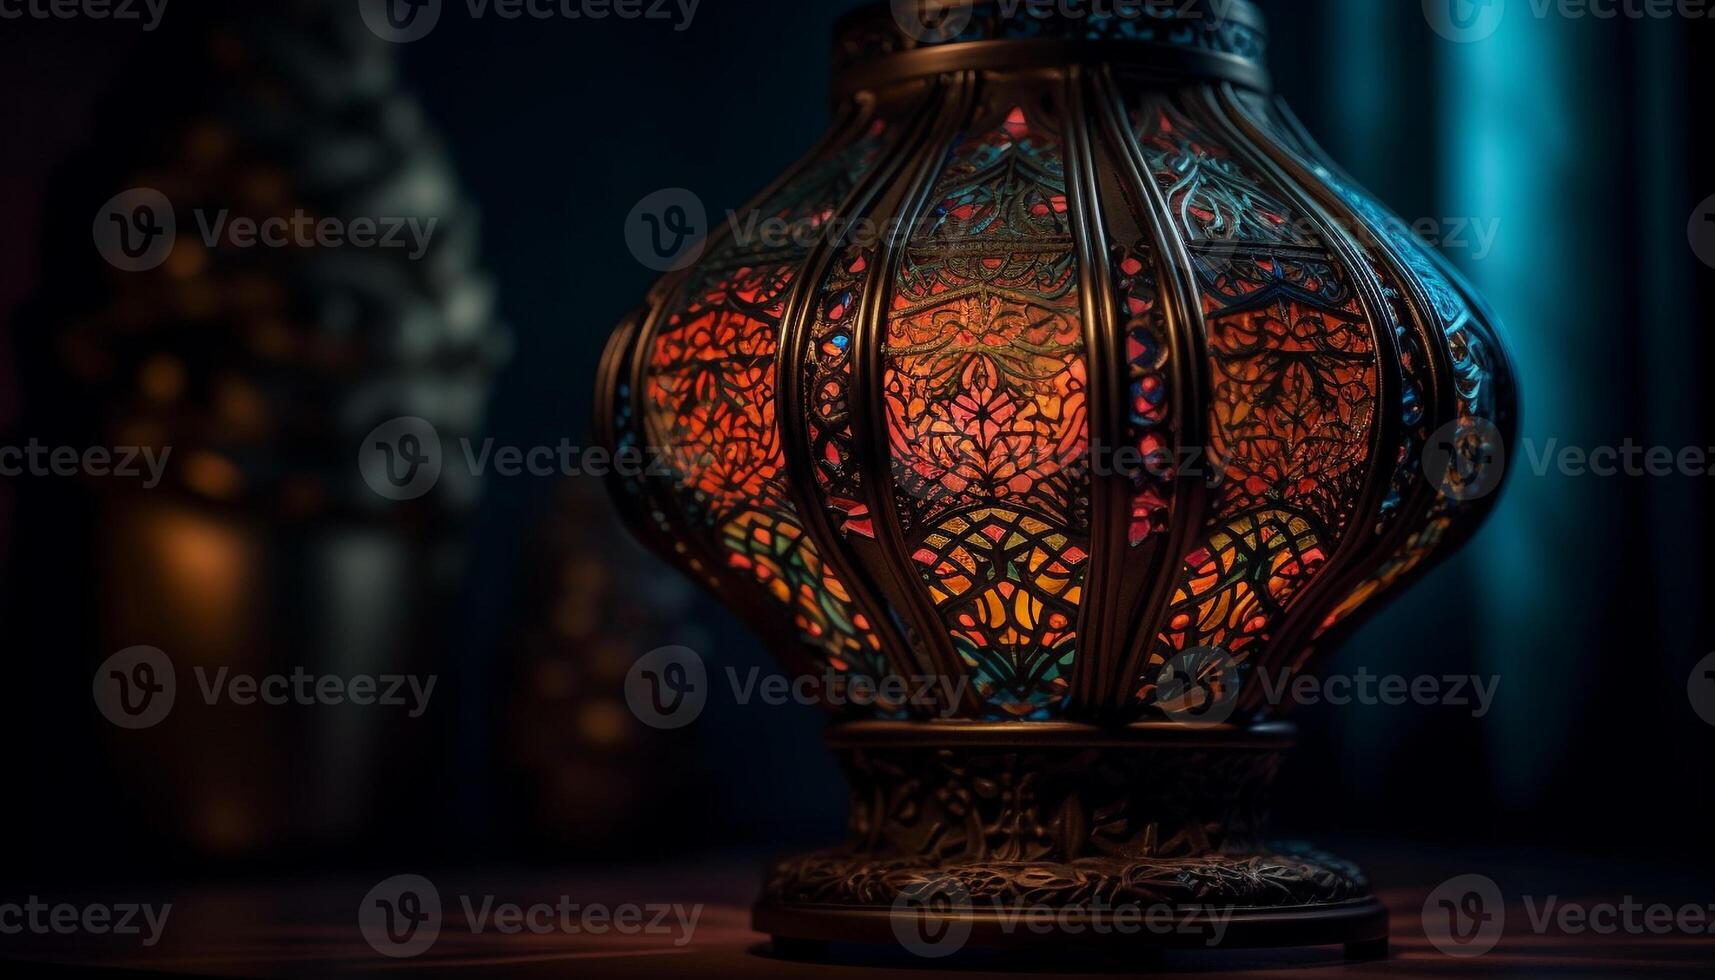 Antique lantern and elegant vase illuminate rustic decor generated by AI photo